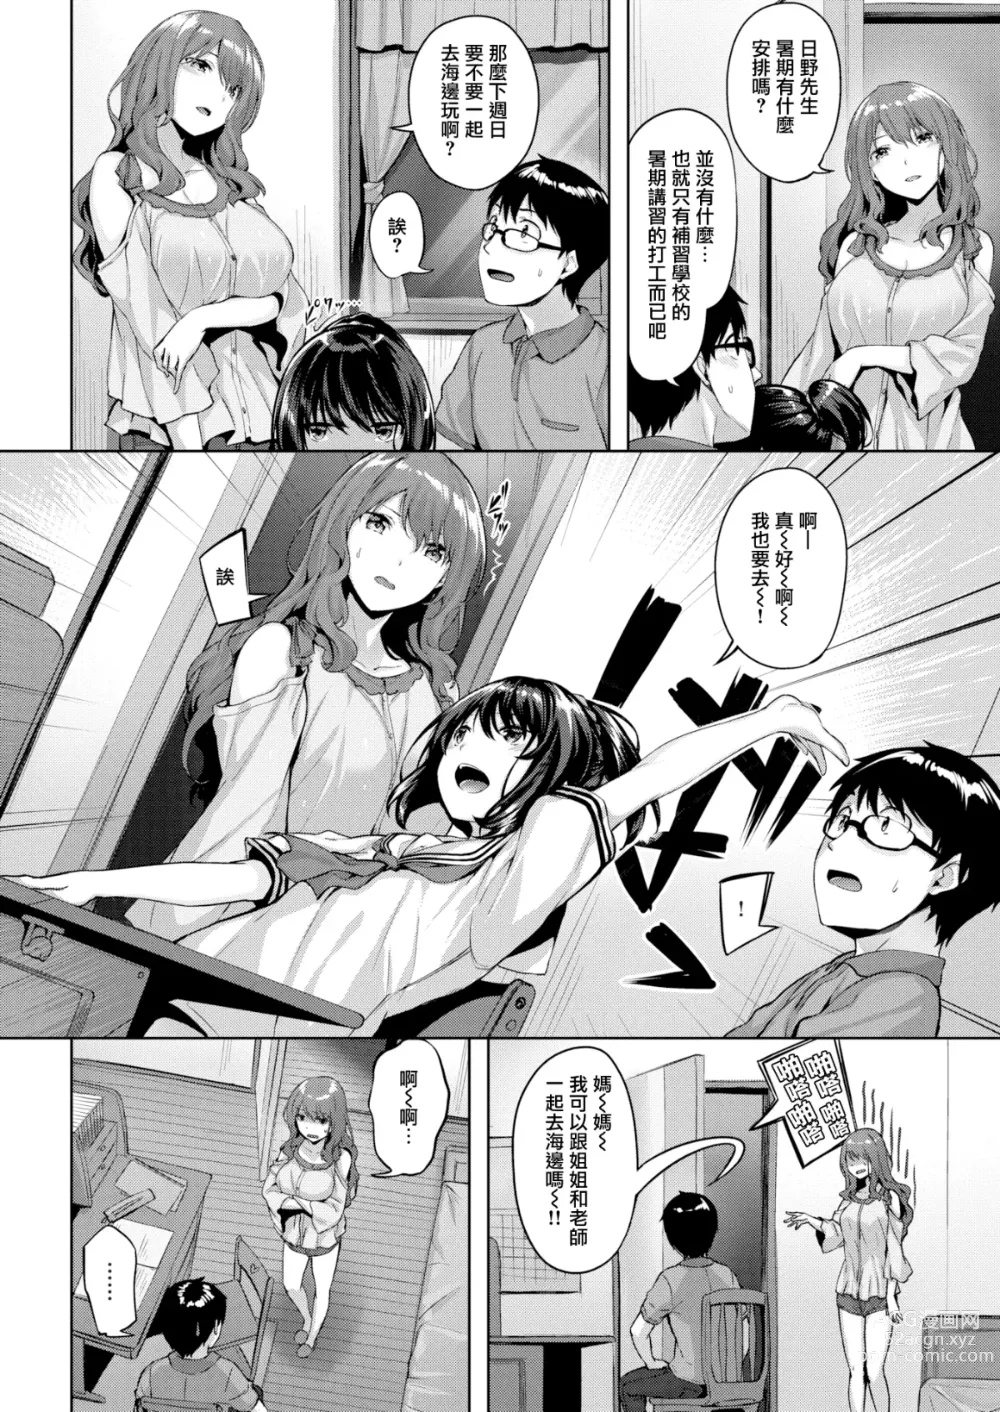 Page 7 of manga Nureta Hana no Nioi - Scent of Wet Flower (uncensored)